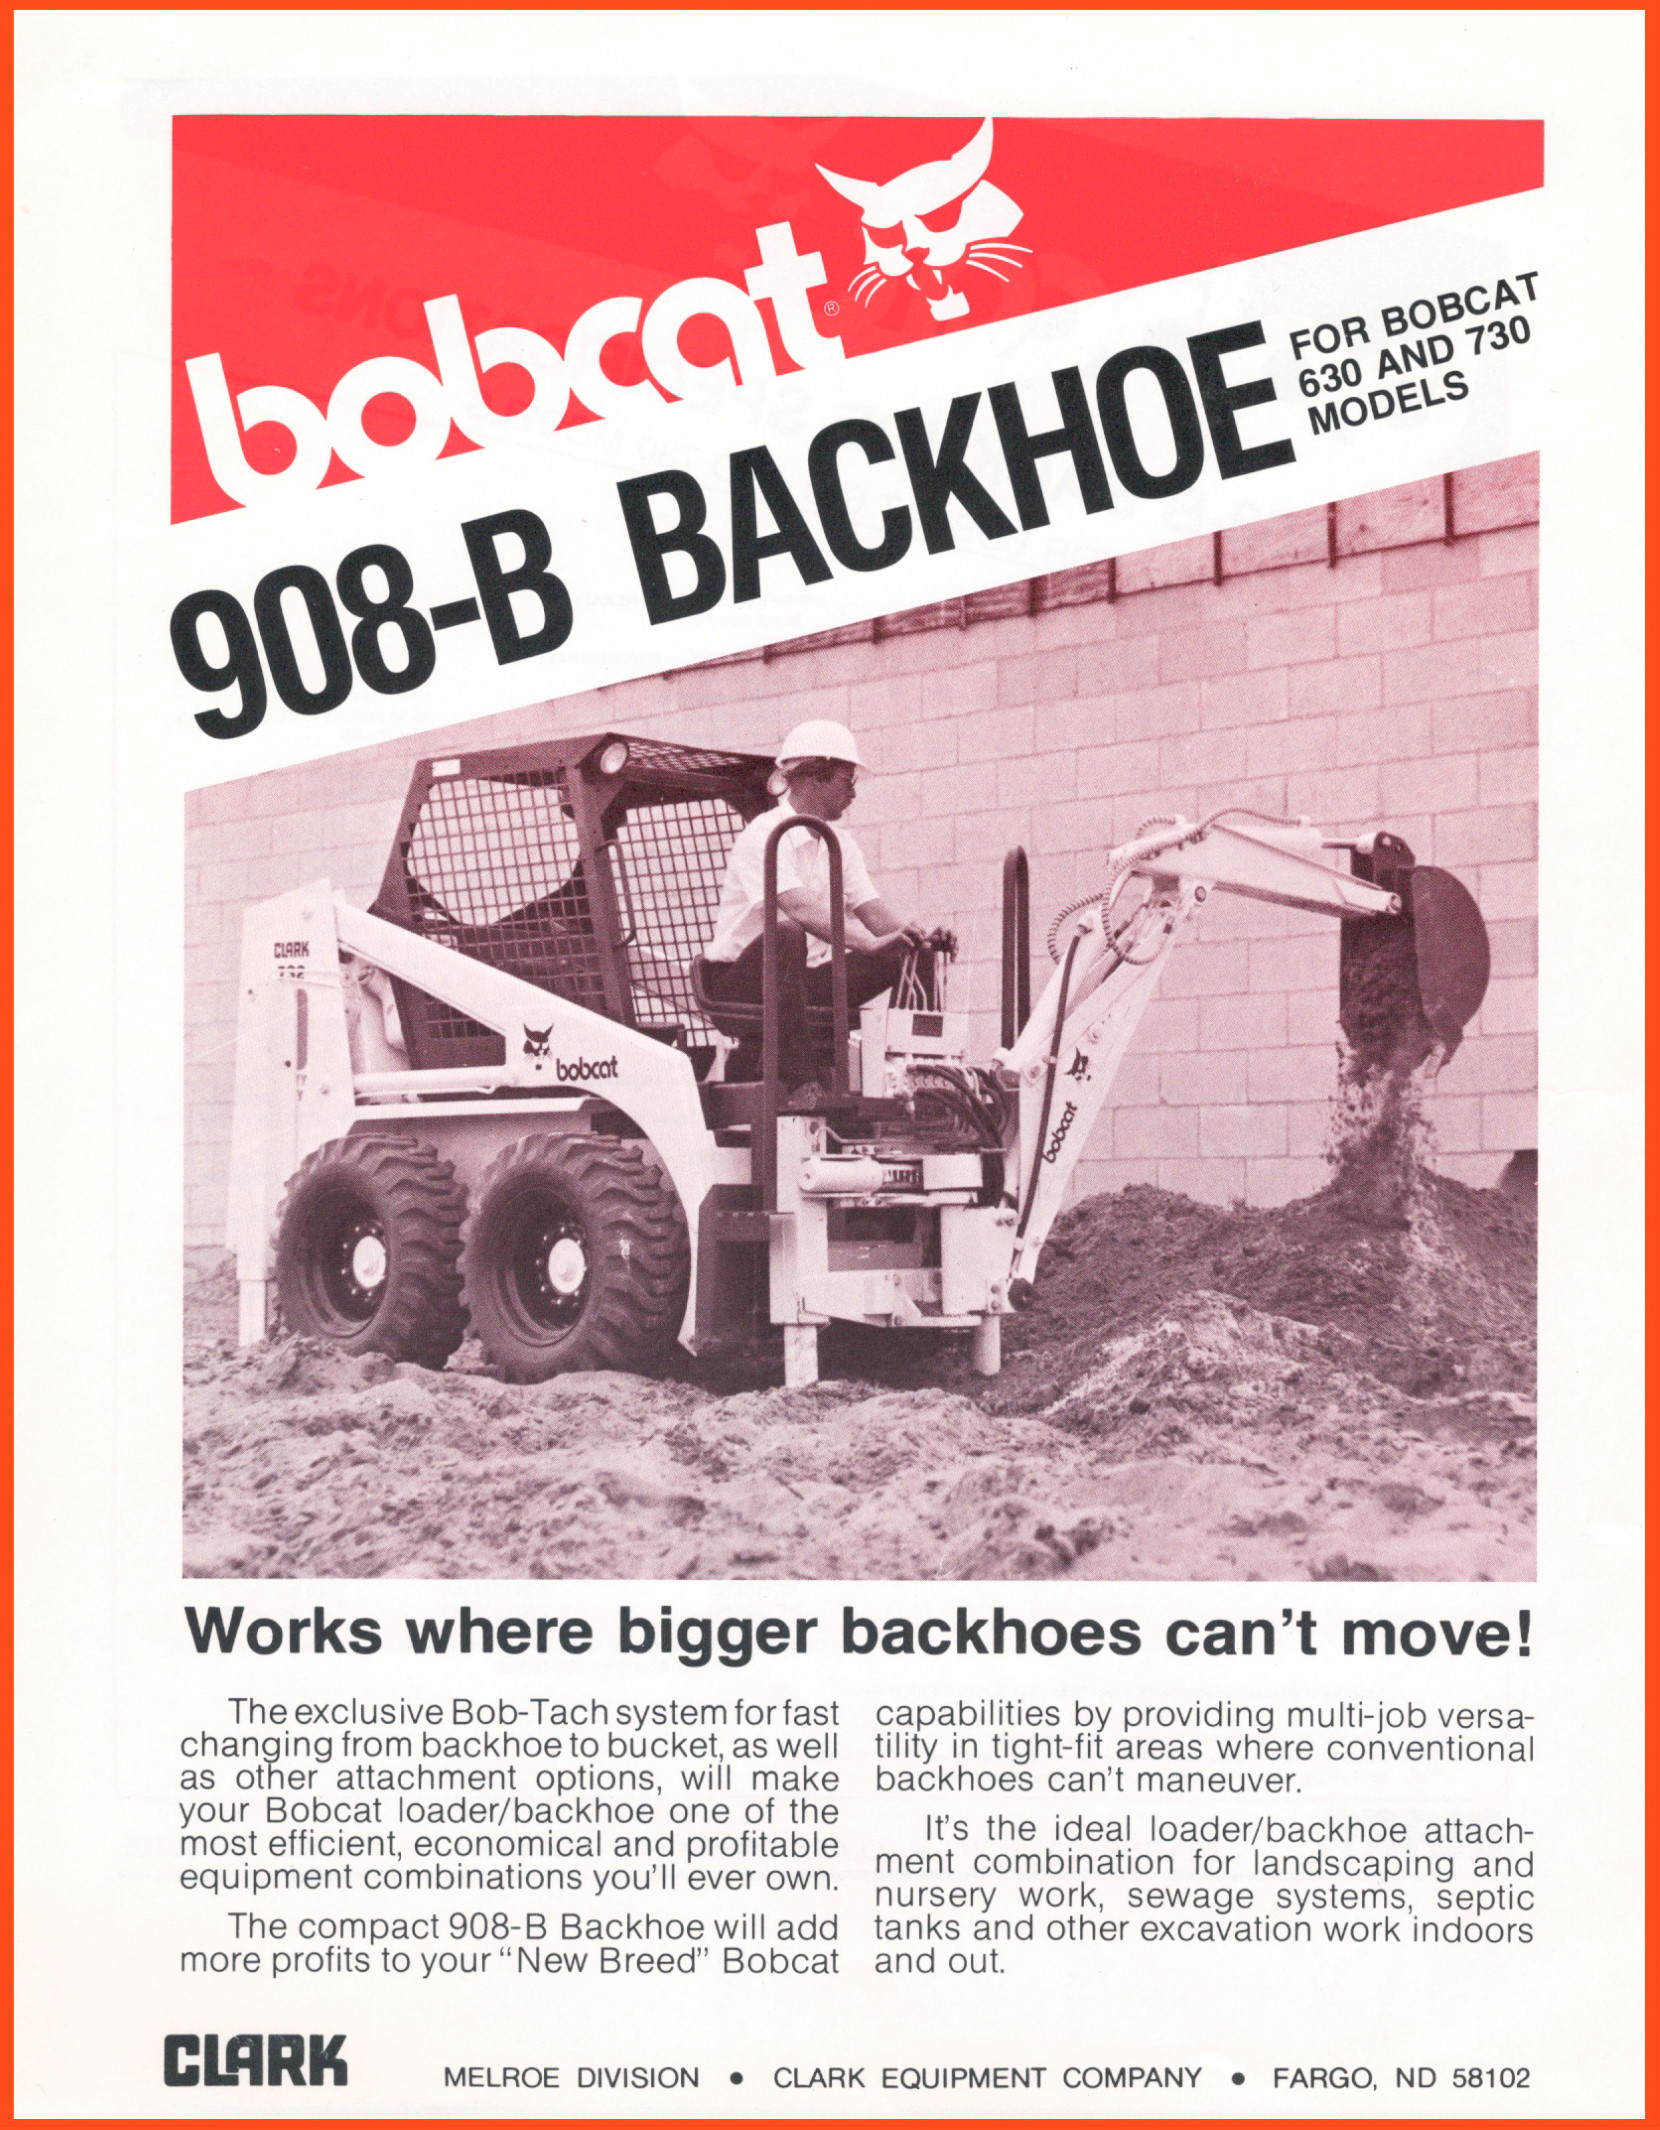 Bobcat 908-B Backhoe Attachment for Bob-Tach @ RVM, LLC | River Valley Machine